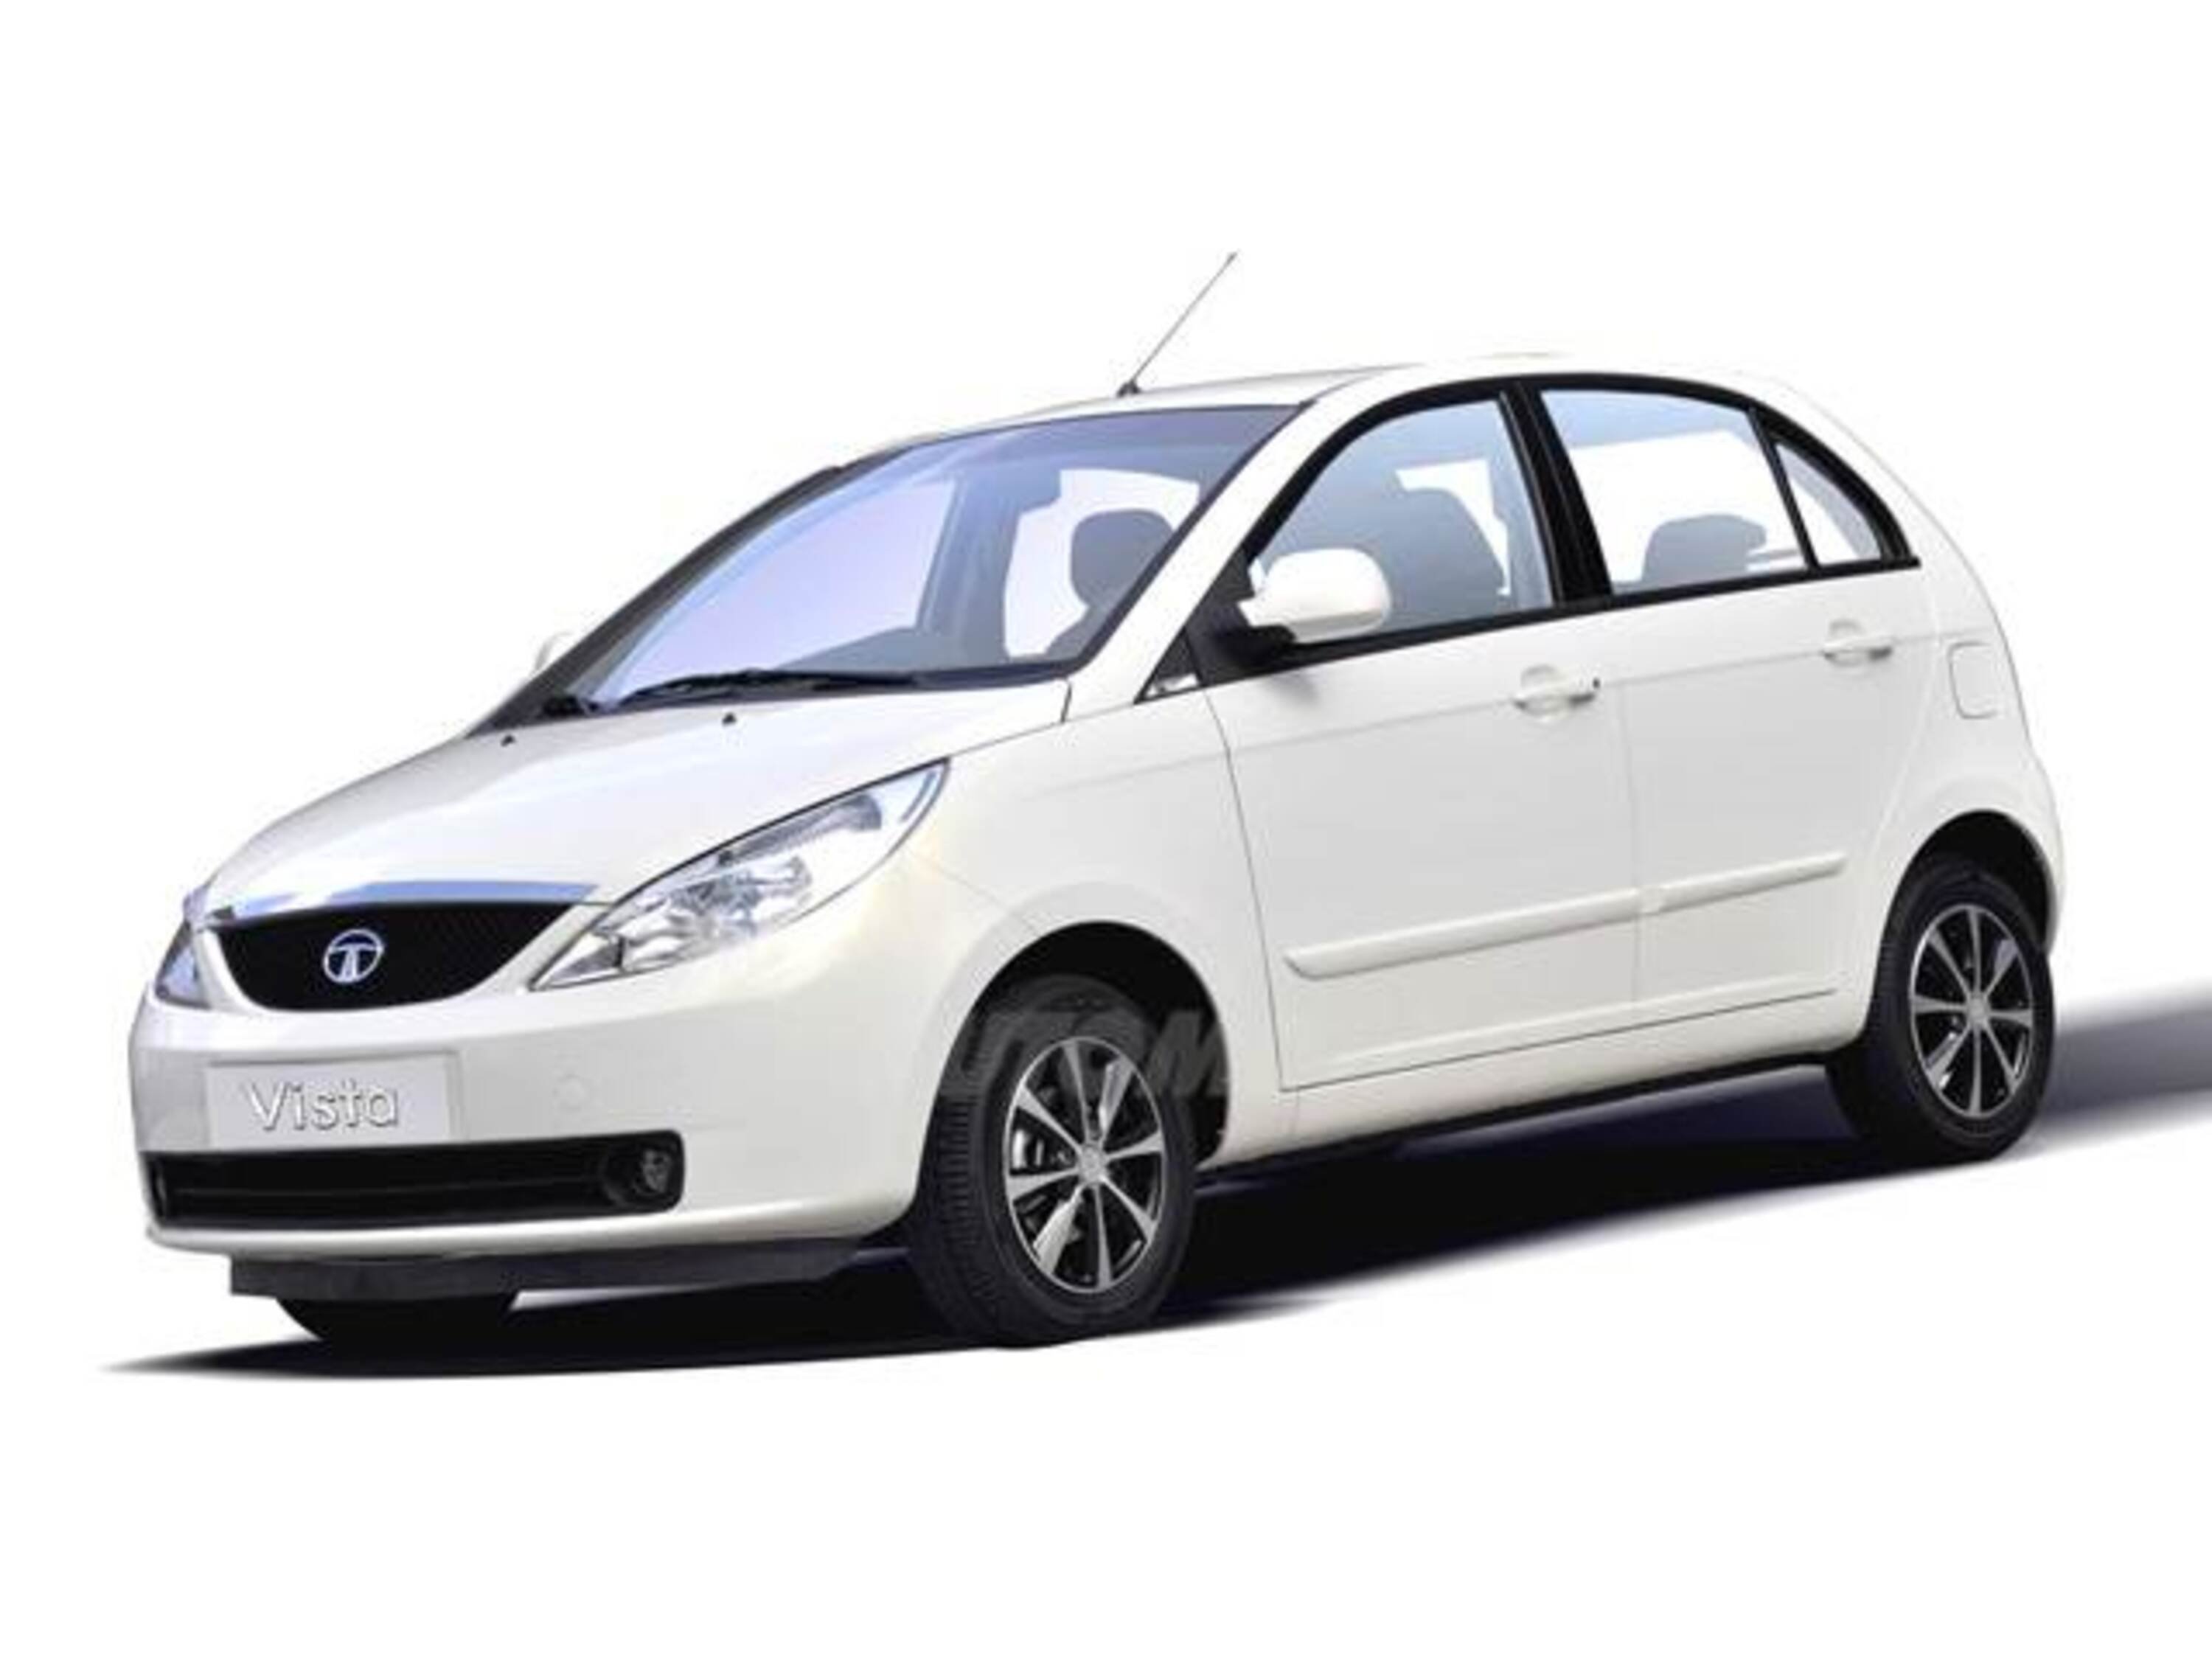 Tata Indica Vista 1.4 Safire Bi Fuel (Gpl) LX 5p.